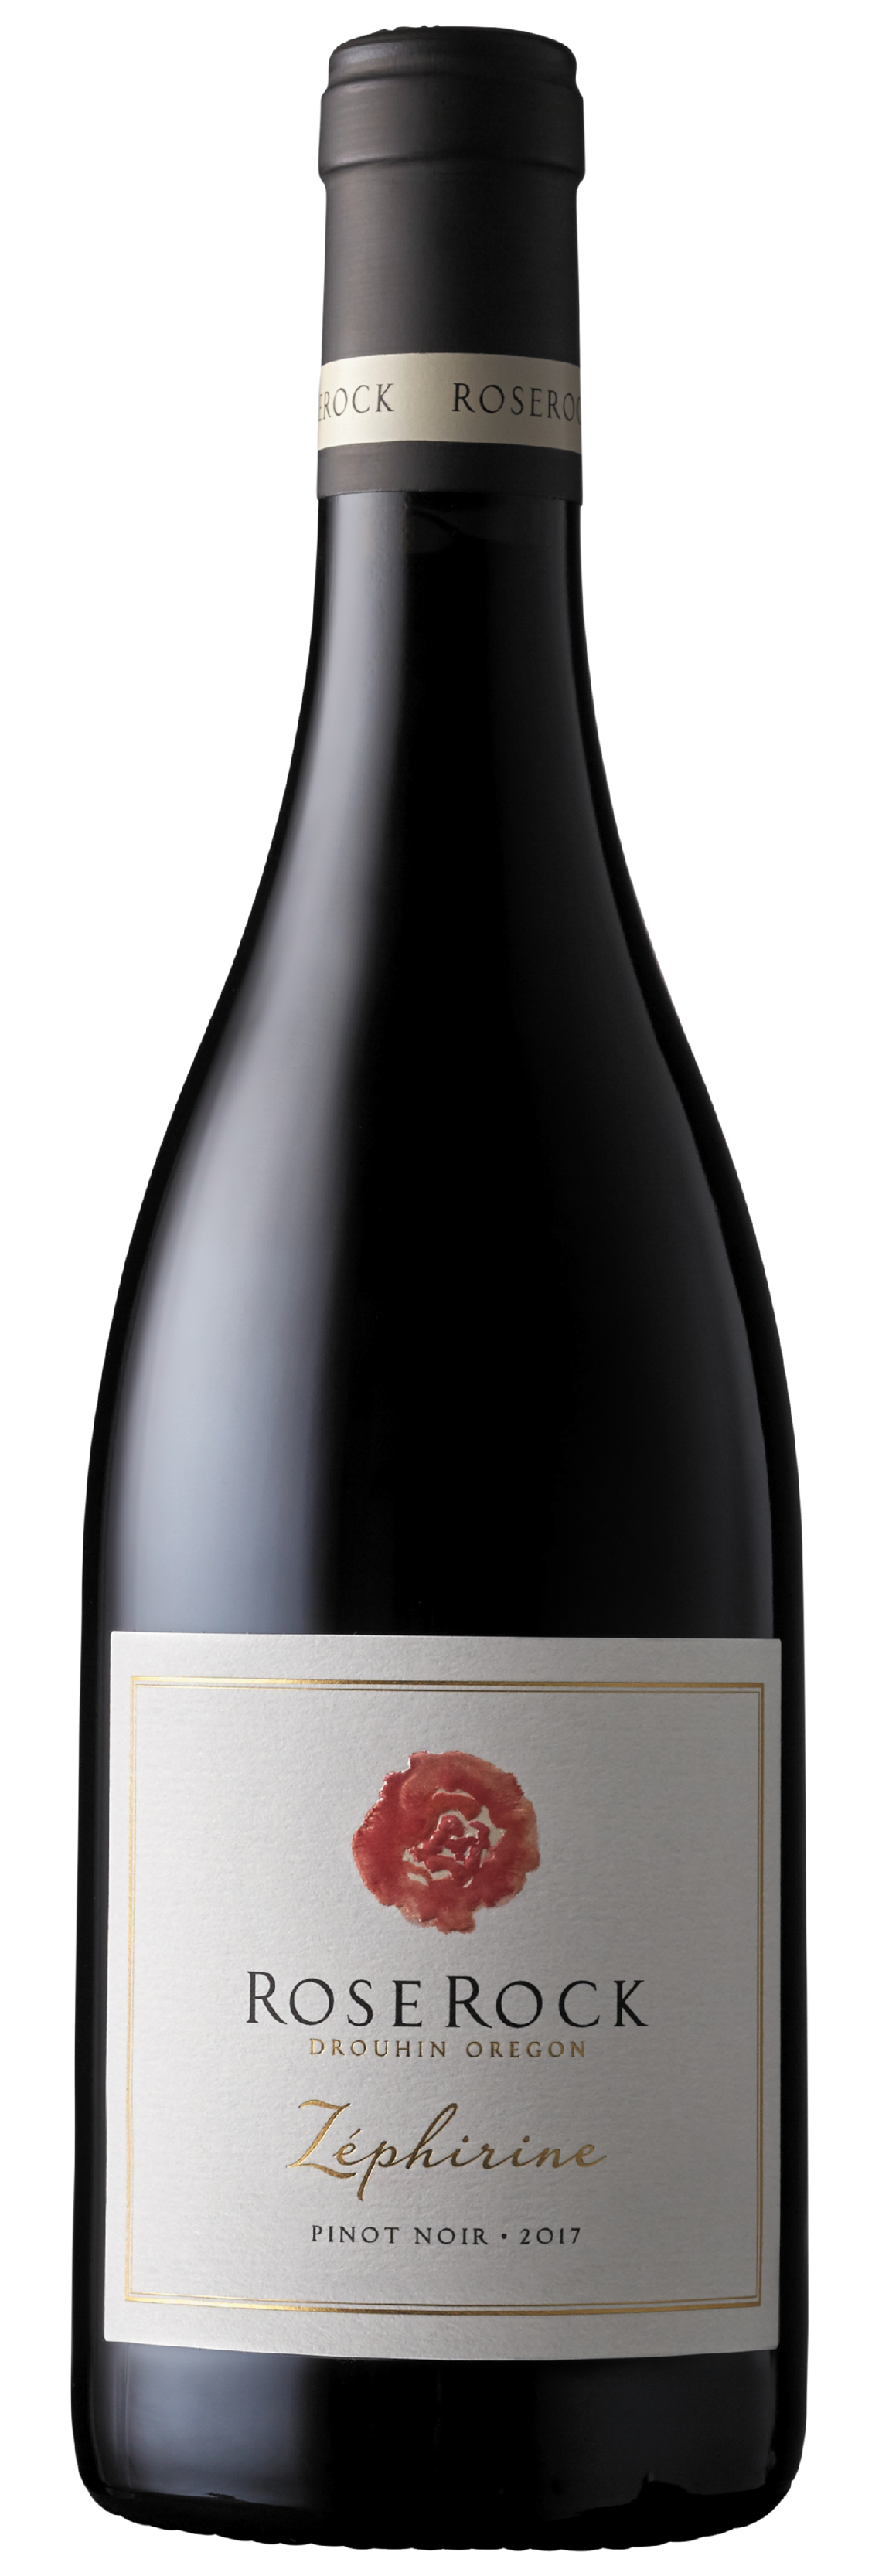 Bottle of Roserock 2017 Zephirine Pinot Noir